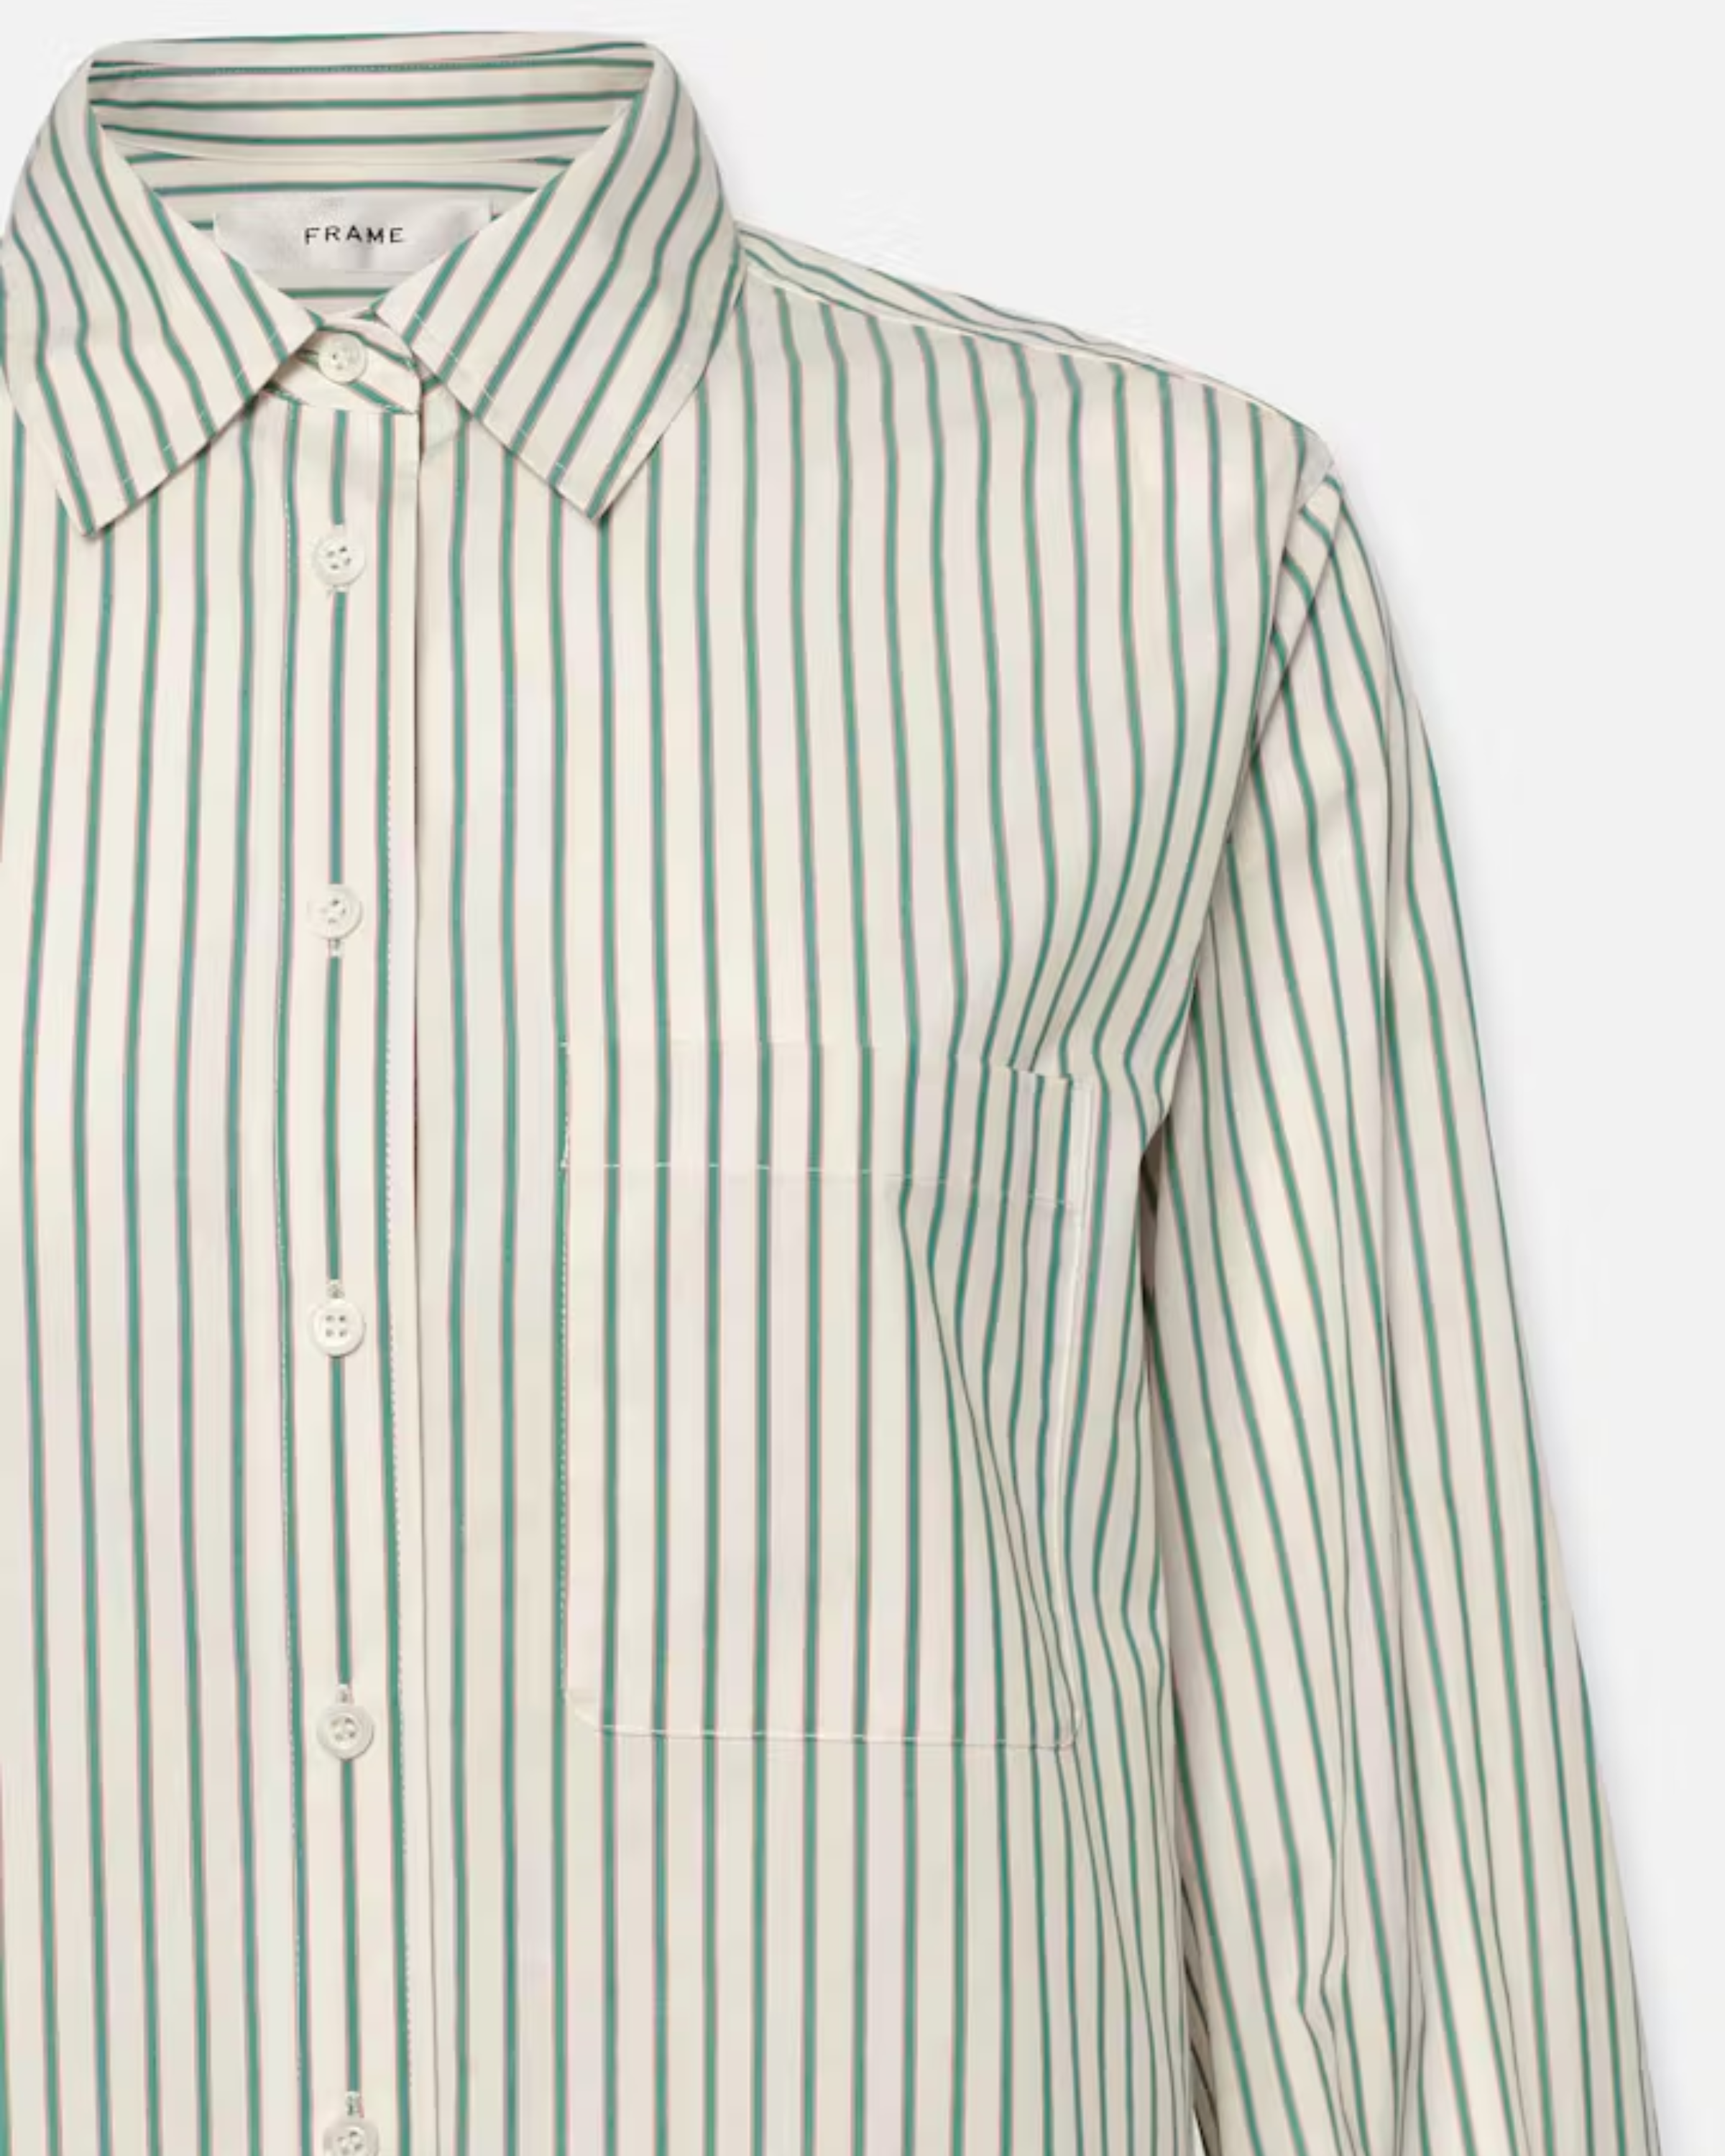 Frame Borrowed Pocket Shirt in Green Multi